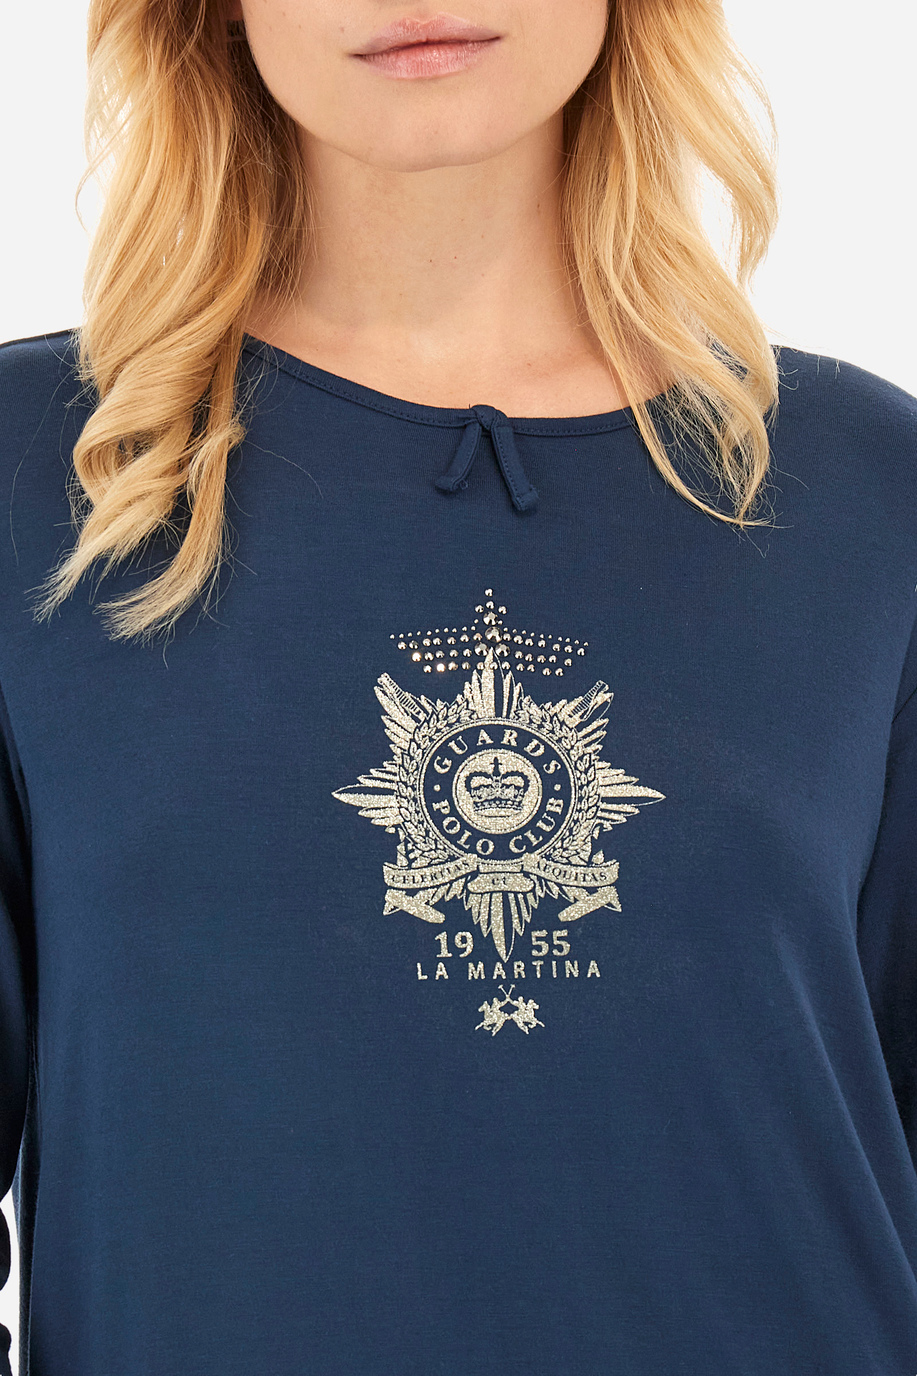 Tee-shirt femme coupe classique - Wyetta - T-shirts | La Martina - Official Online Shop